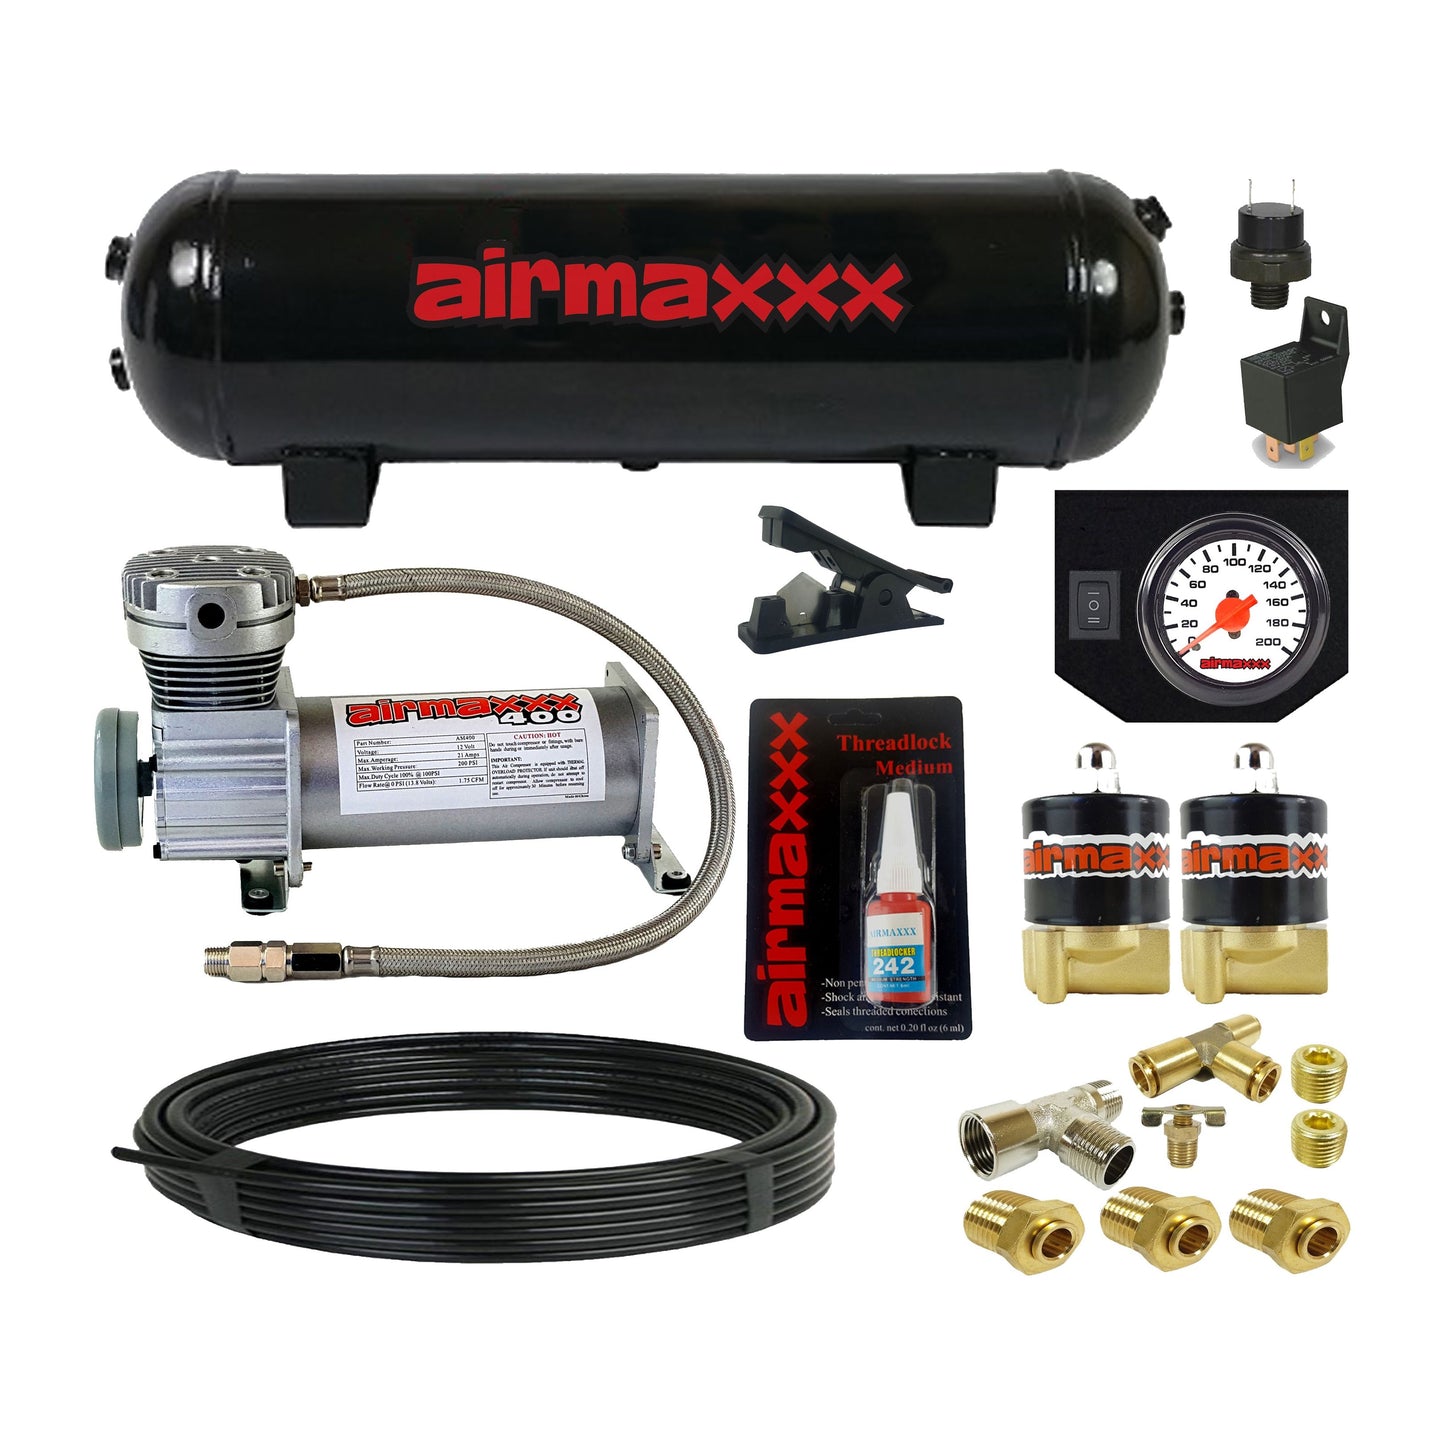 Tow Assist airmaxxx In Cab Control Kit Air Compressor Tank Valves & Gauge